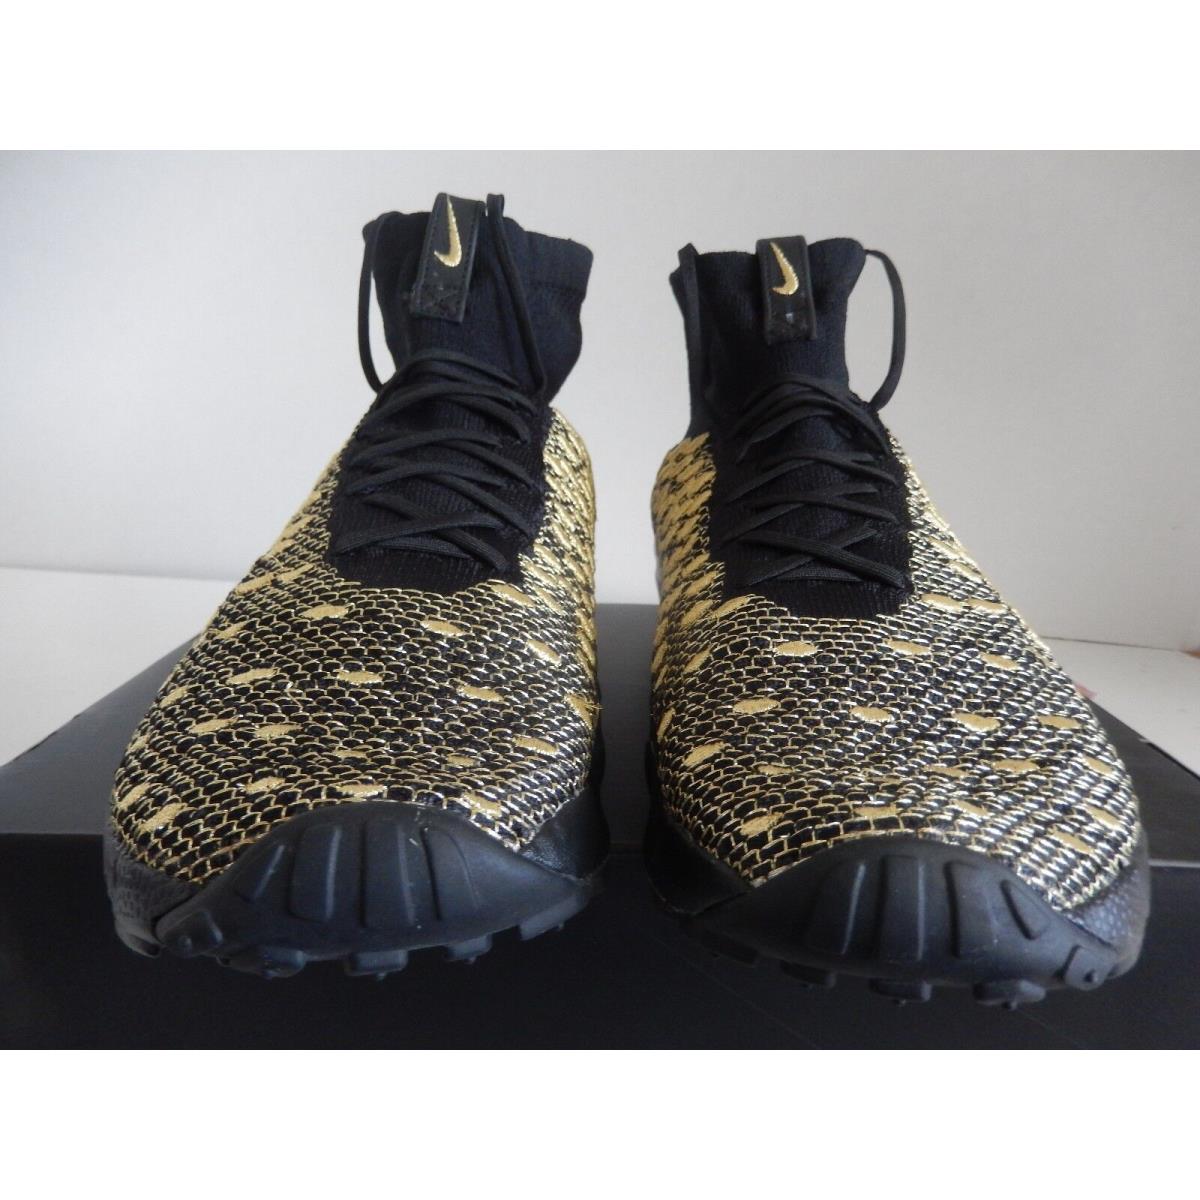 Nike shoes Footscape Magista - Black 1